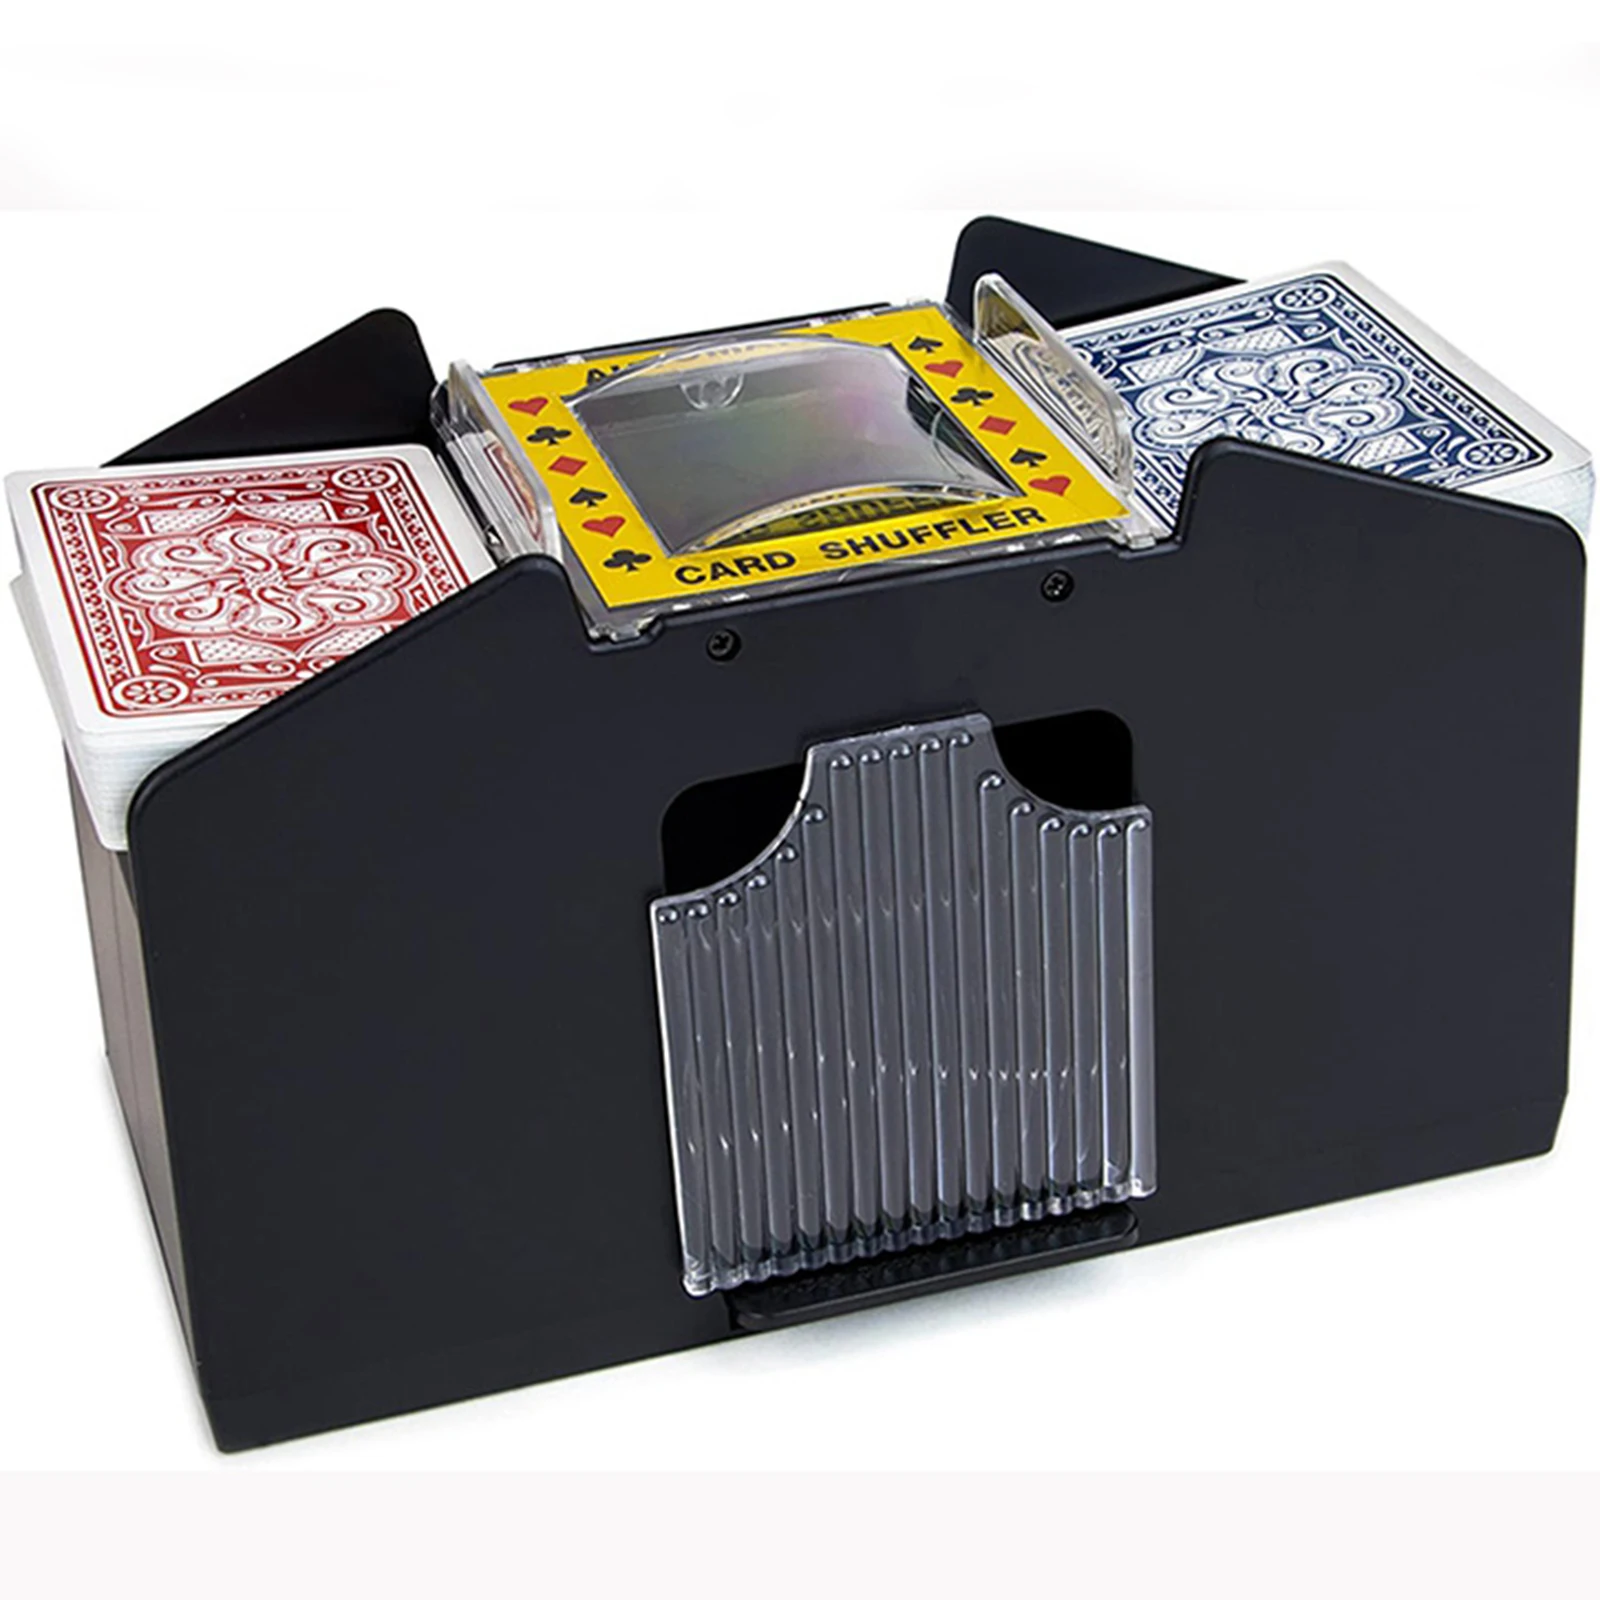 Black 4 Deck Automatic Card Mixer Poker Card Shuffling Machine